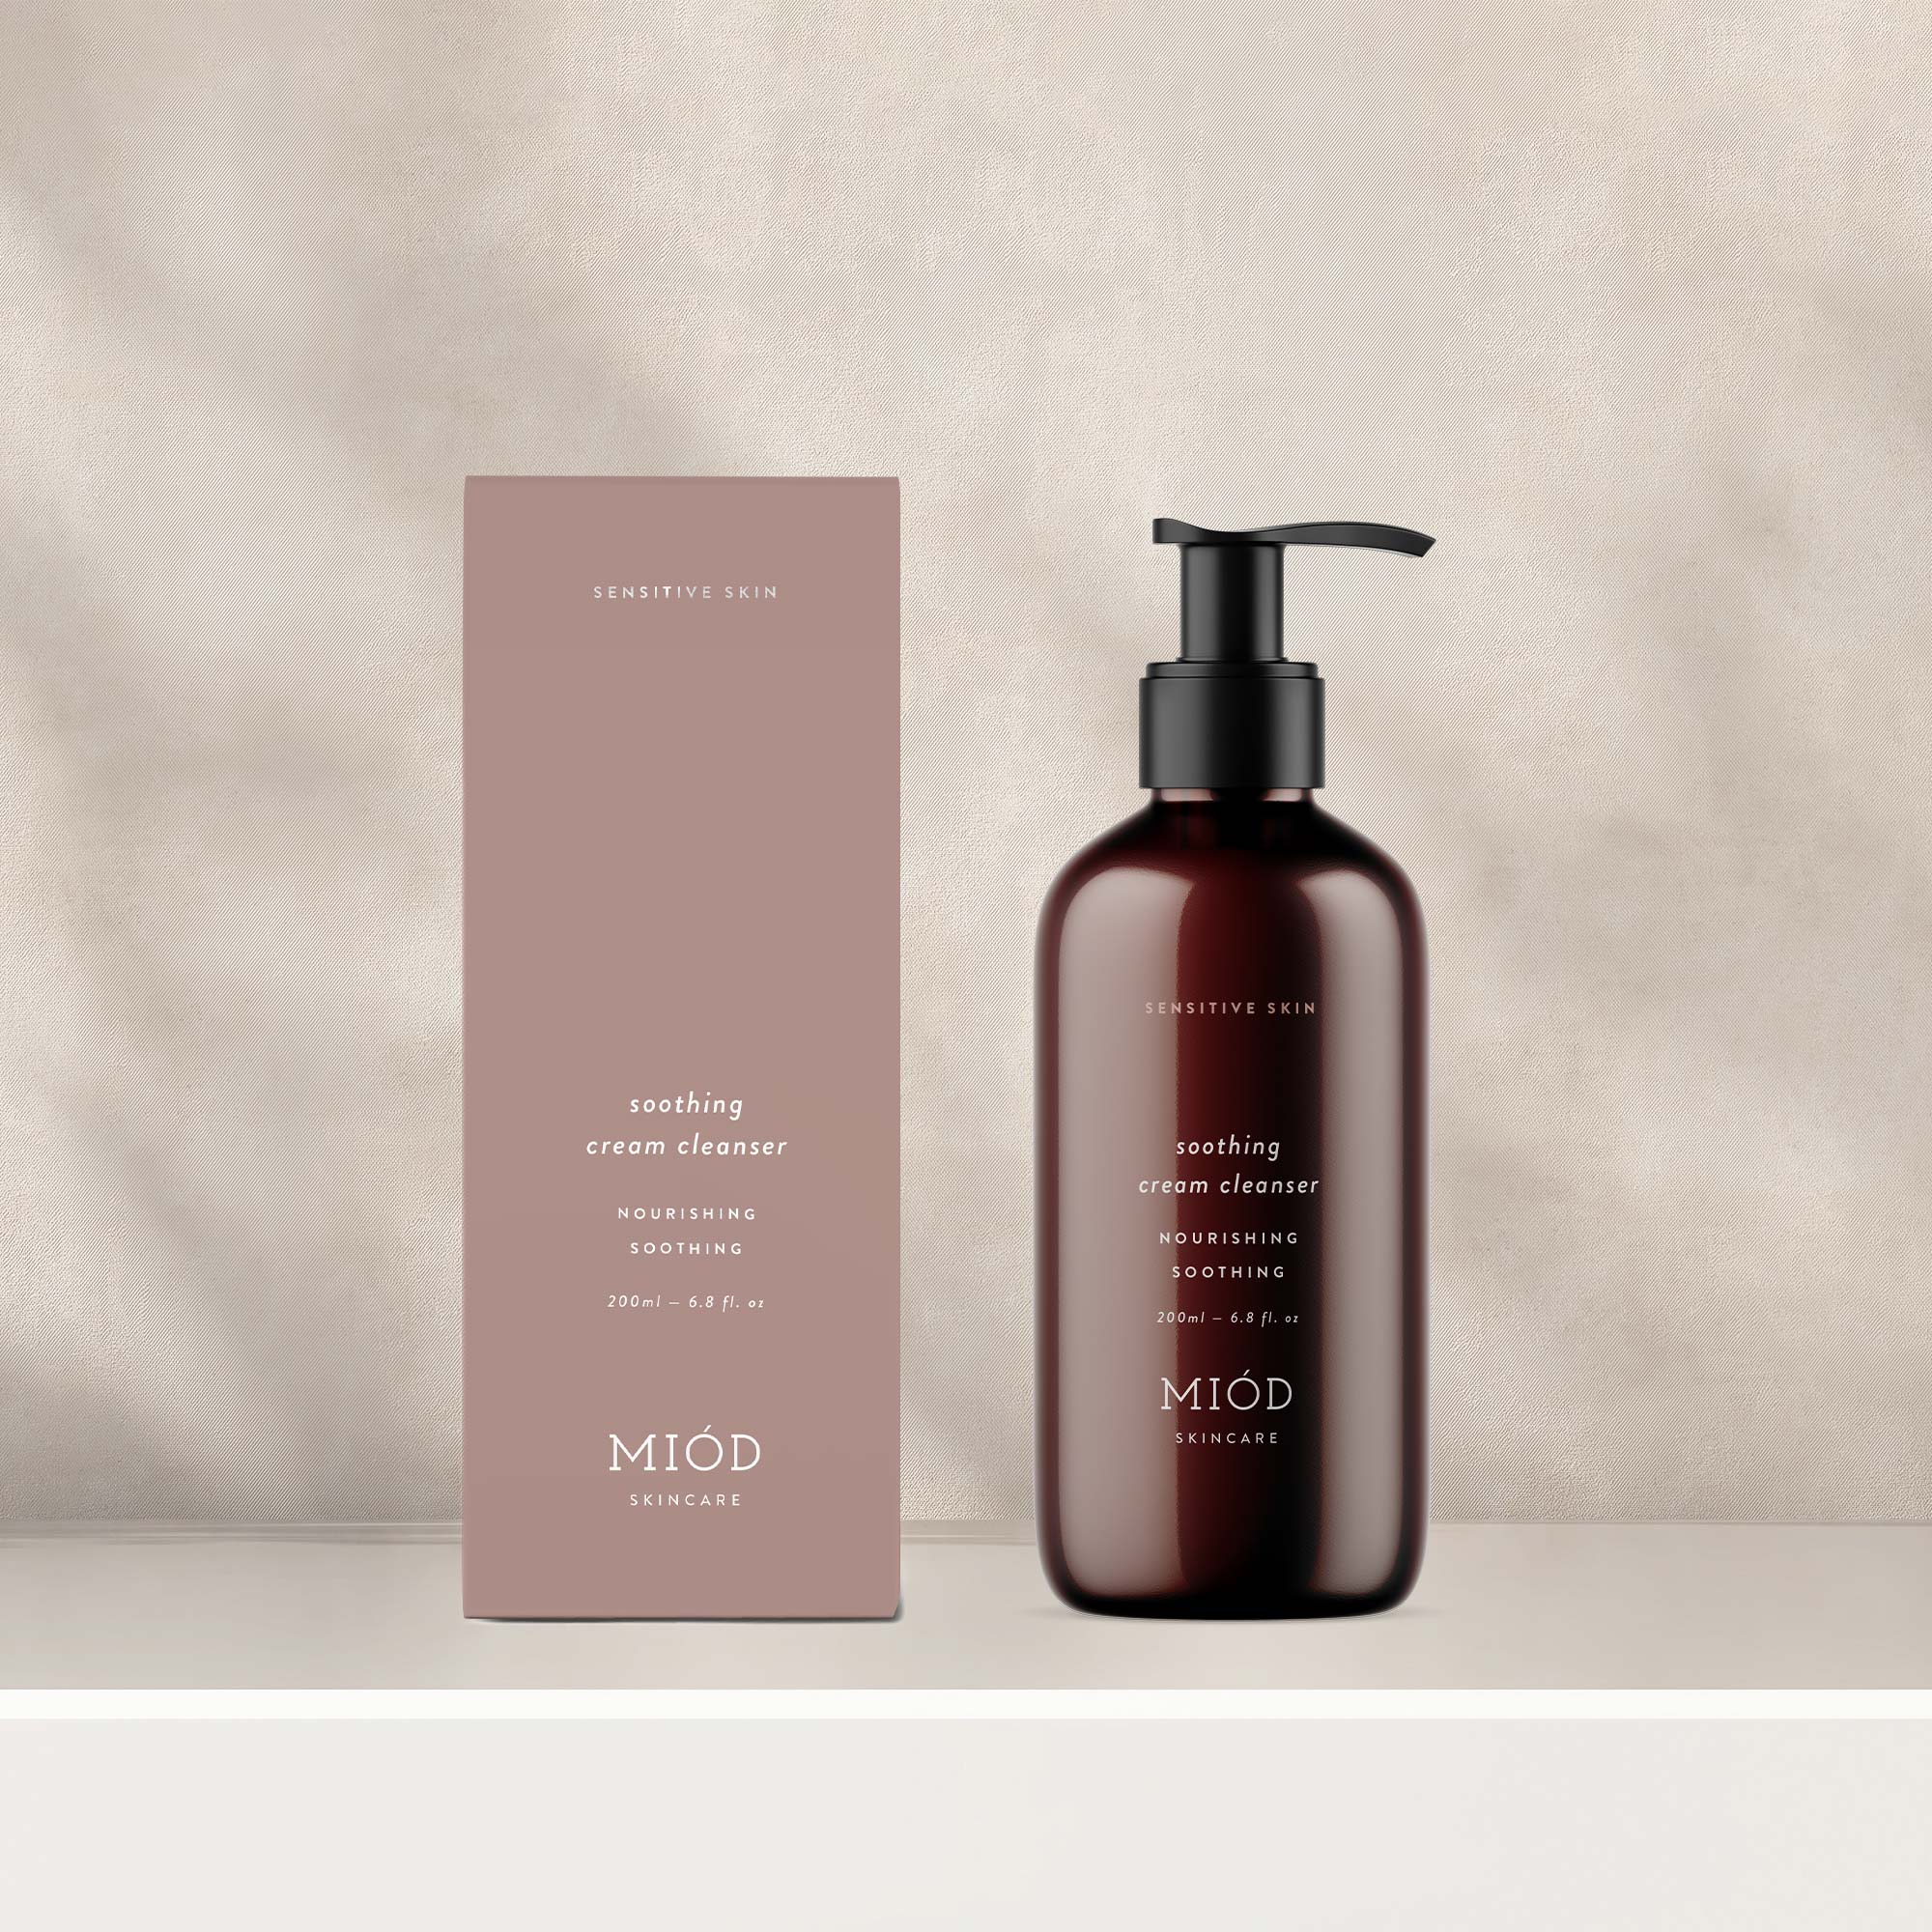 Karolina Król Studio minimalist sustainable packaging design for soothing cream cleanser